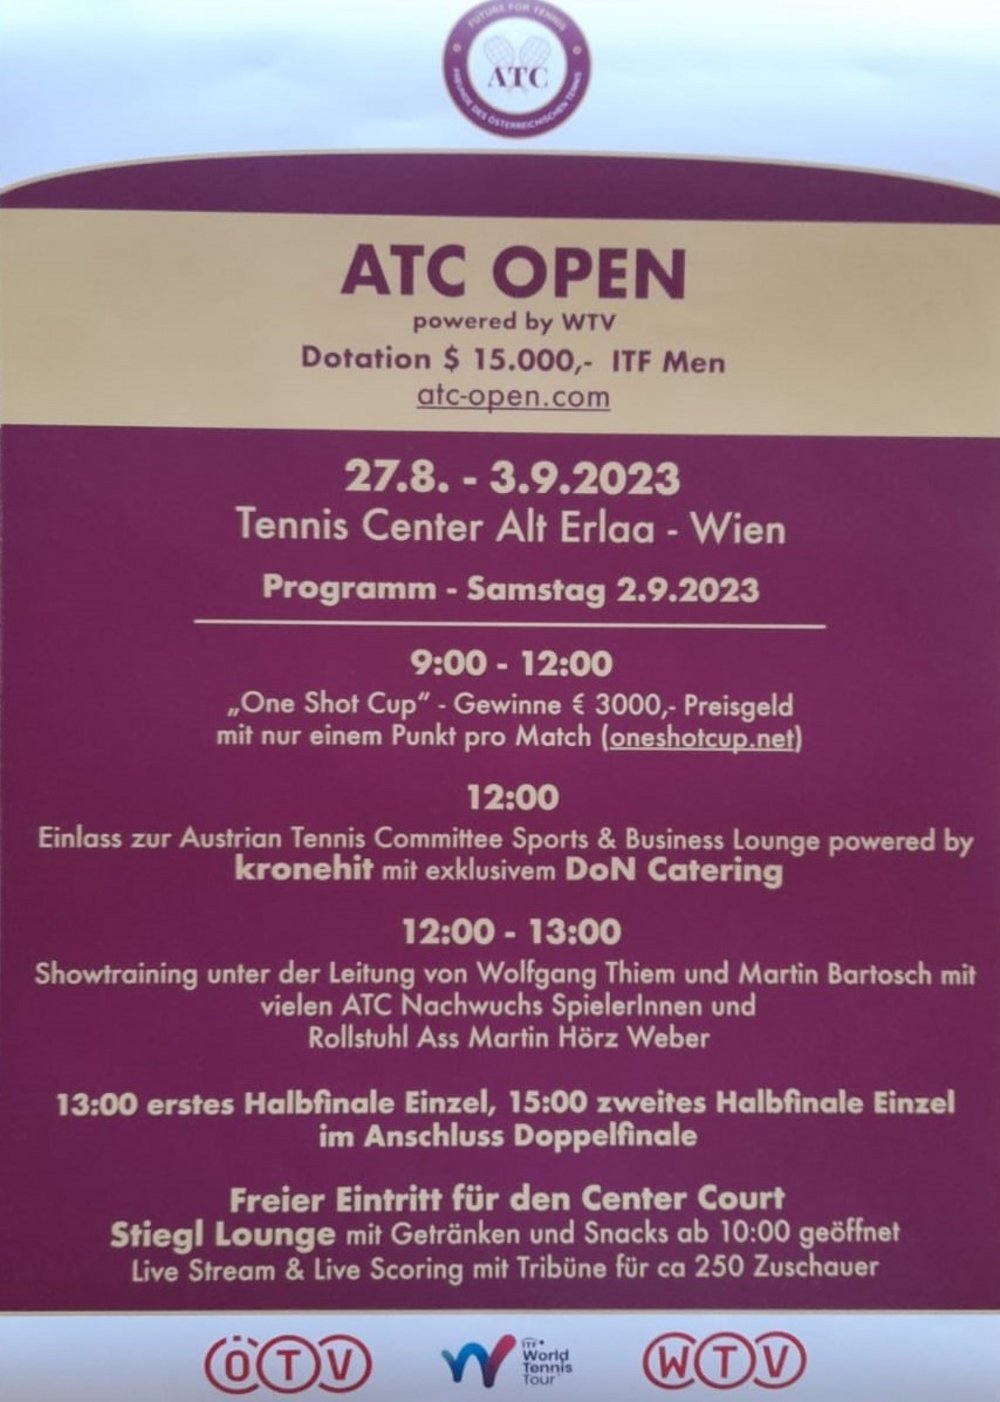 ÖTV ATC Open presented by WTV Toptennis hautnah, VIP-Lounge und Livestream